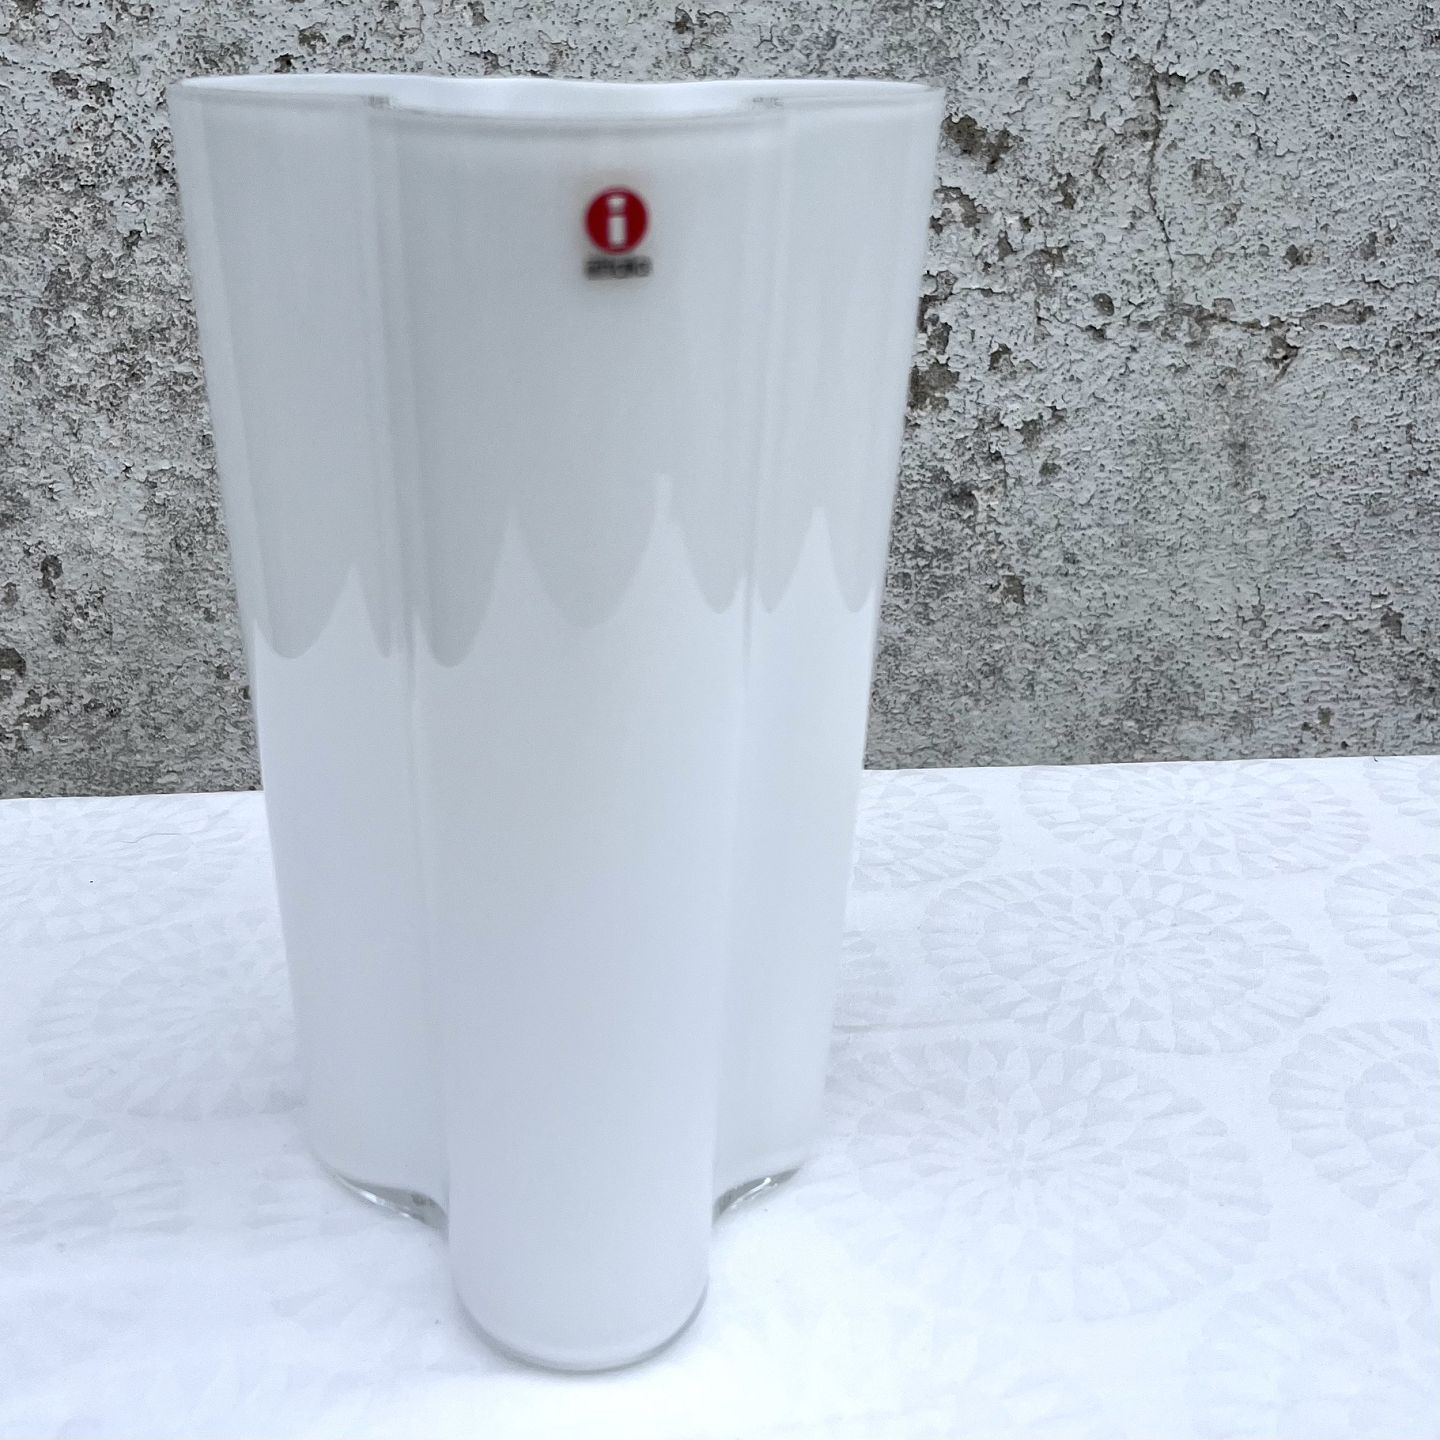 Moster Olga - Antik & Design - Iittala Alvar Aalto vase * Opal white *DKK 400 - Iittala * Alvar Aalto vase * Opal * *DKK 400